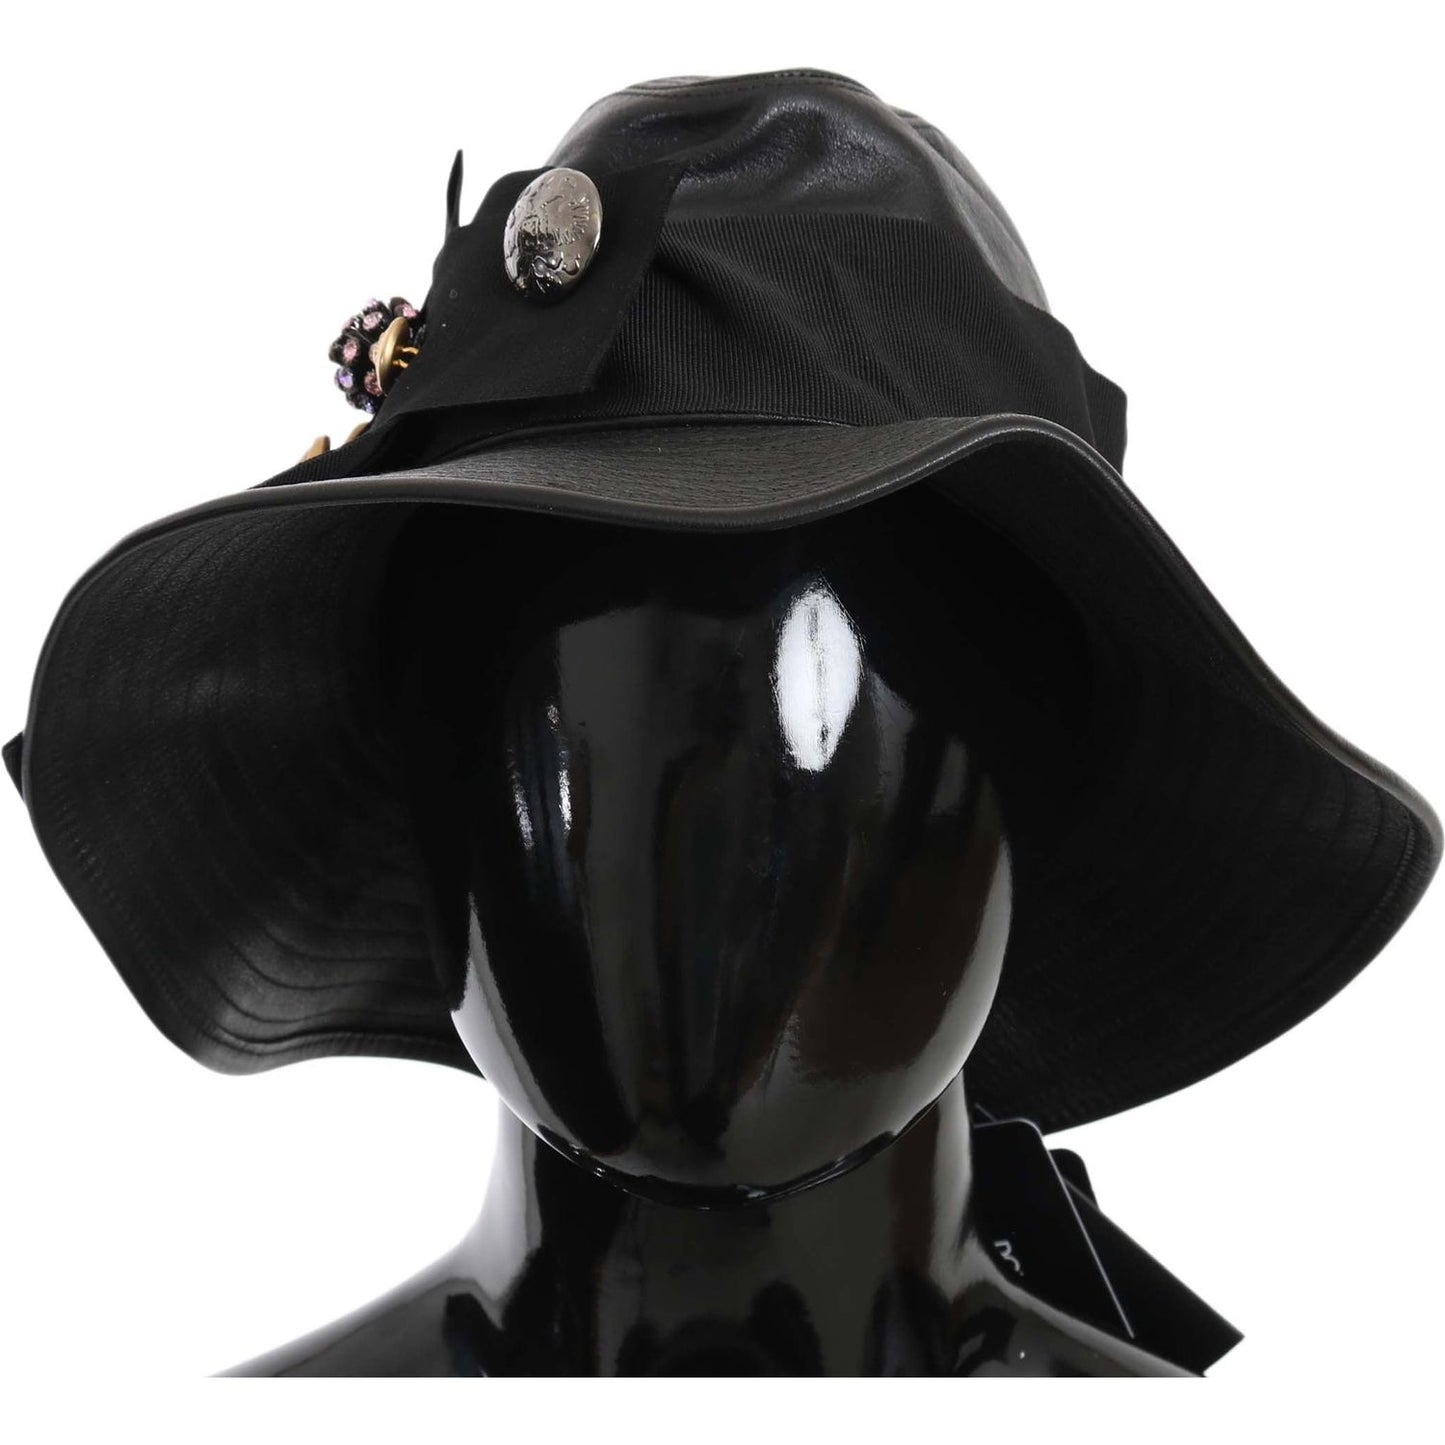 Dolce & Gabbana Black Leather DG Coin Crystal Wide Brim Hat black-leather-dg-coin-crystal-wide-brim-hat Hat IMG_0142-2.jpg